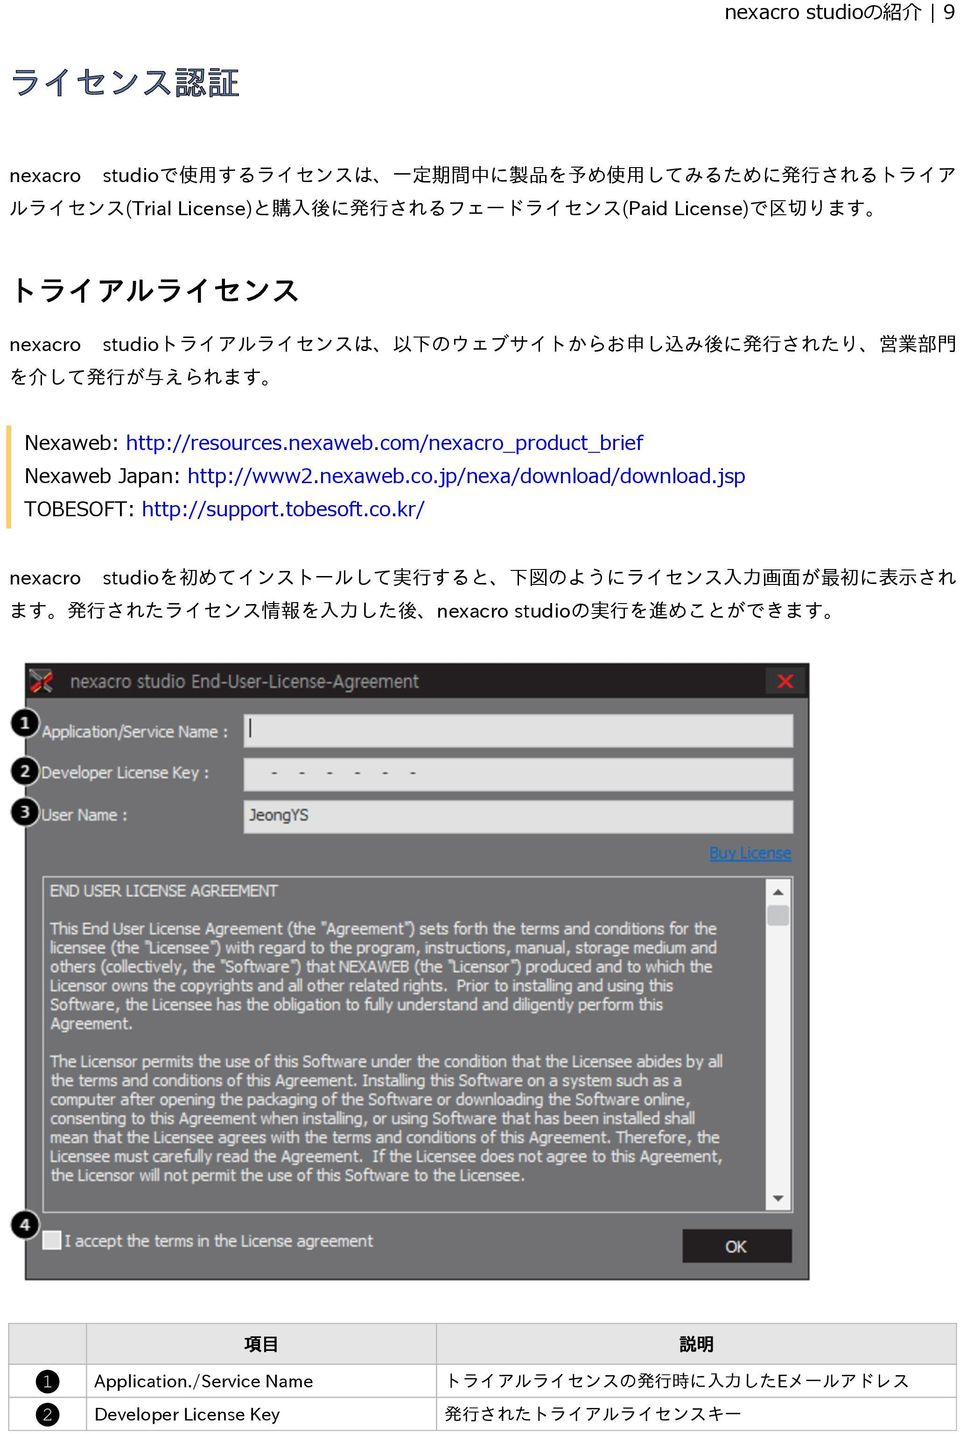 com/nexacro_product_brief Nexaweb Japan: http://www2.nexaweb.co.jp/nexa/download/download.jsp TOBESOFT: http://support.tobesoft.co.kr/ nexacro studioを 初 めてインストールして 実 行 すると 下 図 のようにライセンス 入 力 画 面 が 最 初 に 表 示 され ます 発 行 されたライセンス 情 報 を 入 力 した 後 nexacro studioの 実 行 を 進 めことができます 項 目 説 明 1 Application.